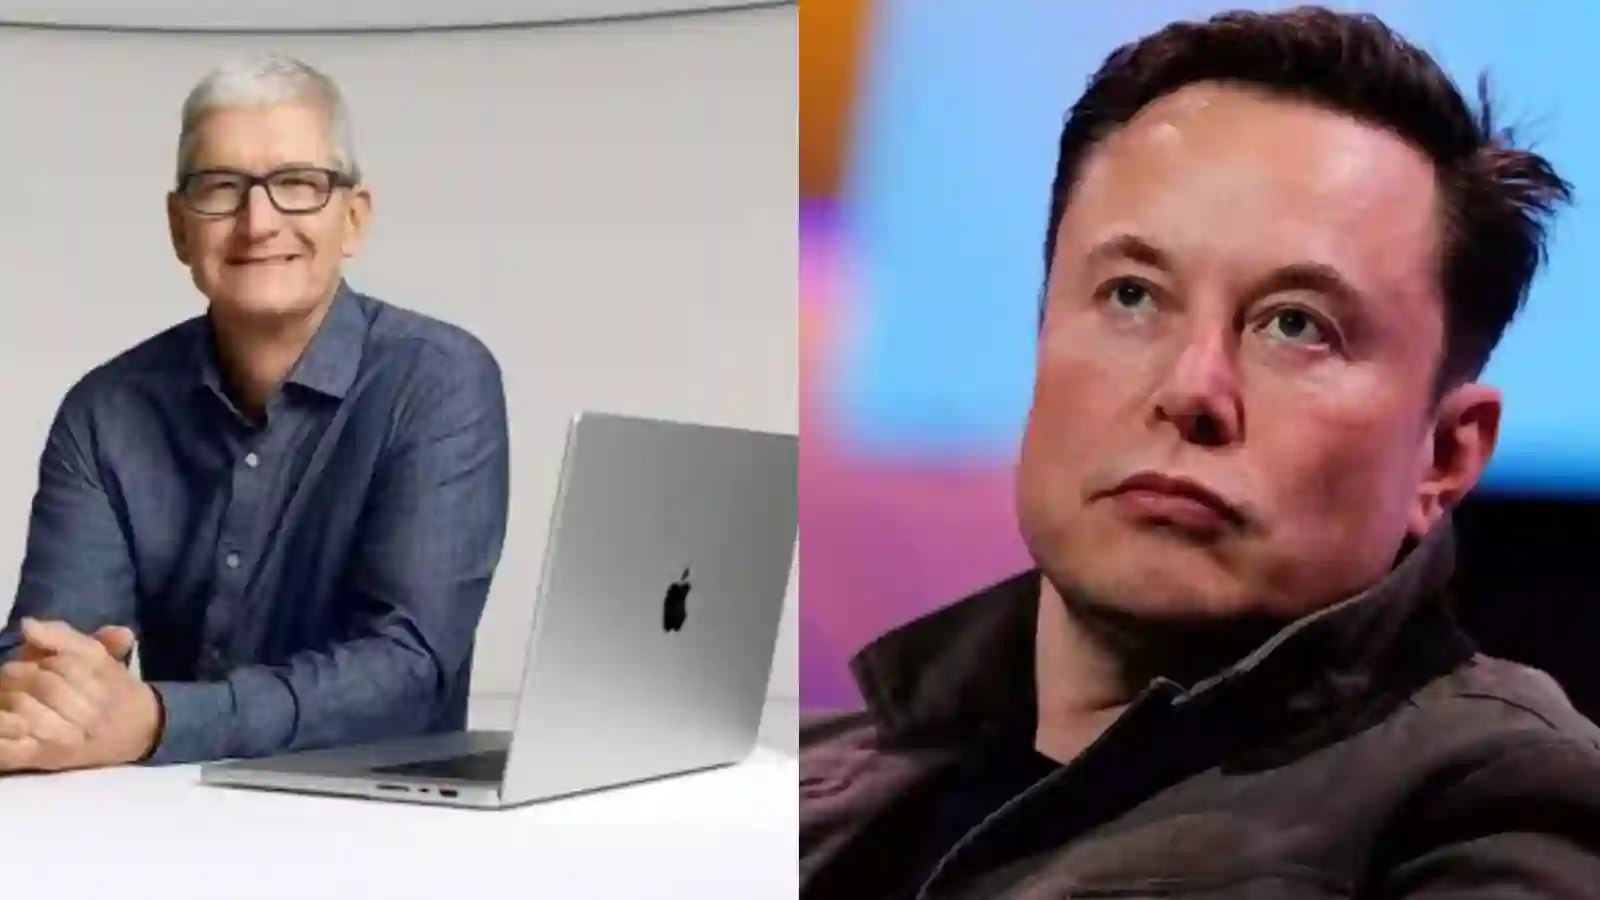 Tim Cook and Elon Musk